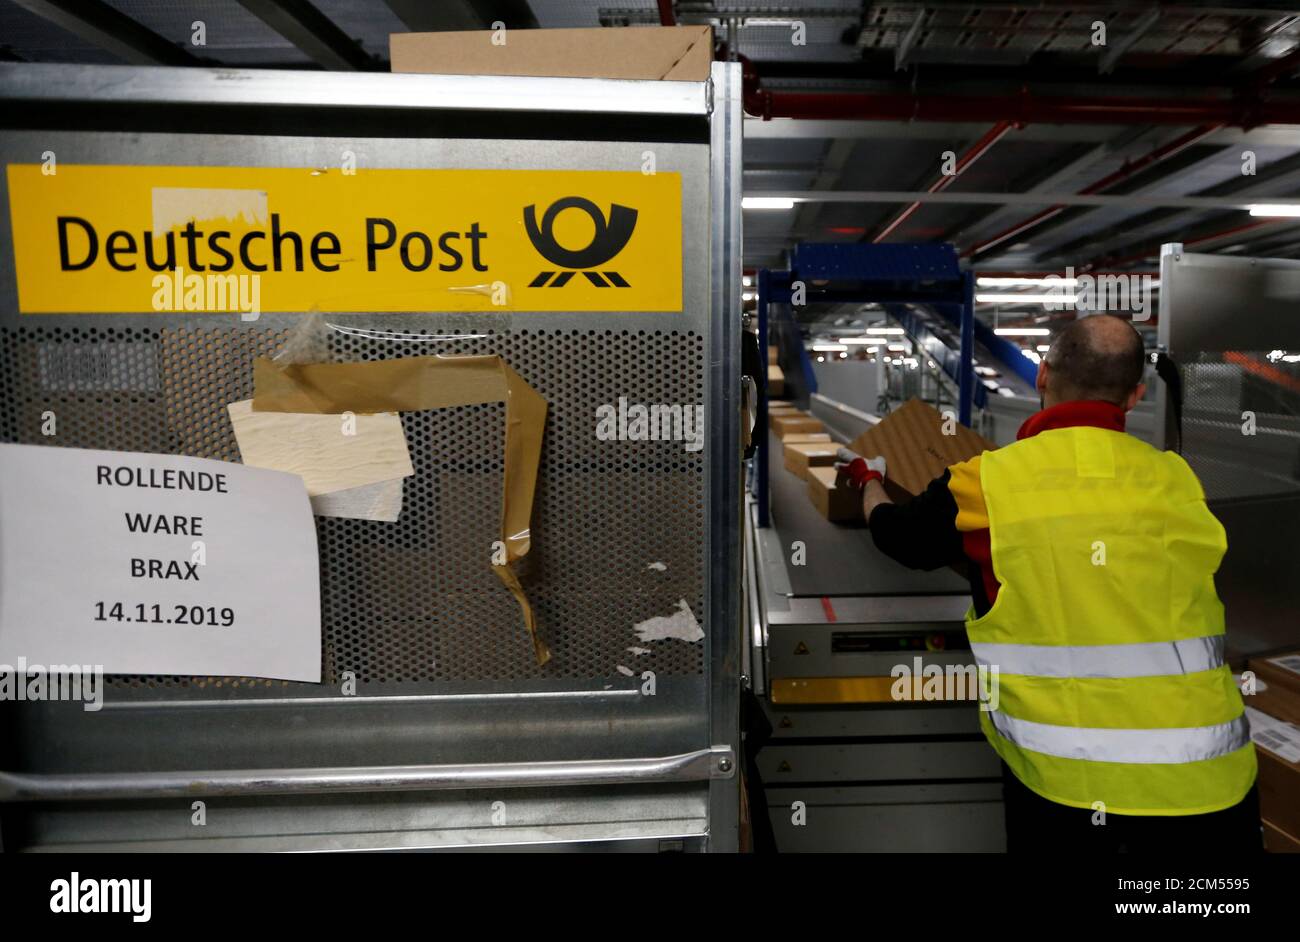 An employee puts parcels on a conveyor belt at a new DHL/Deutsche Post  parcel center in Bochum, Germany, November 18, 2019. REUTERS/Leon Kuegeler  Stock Photo - Alamy